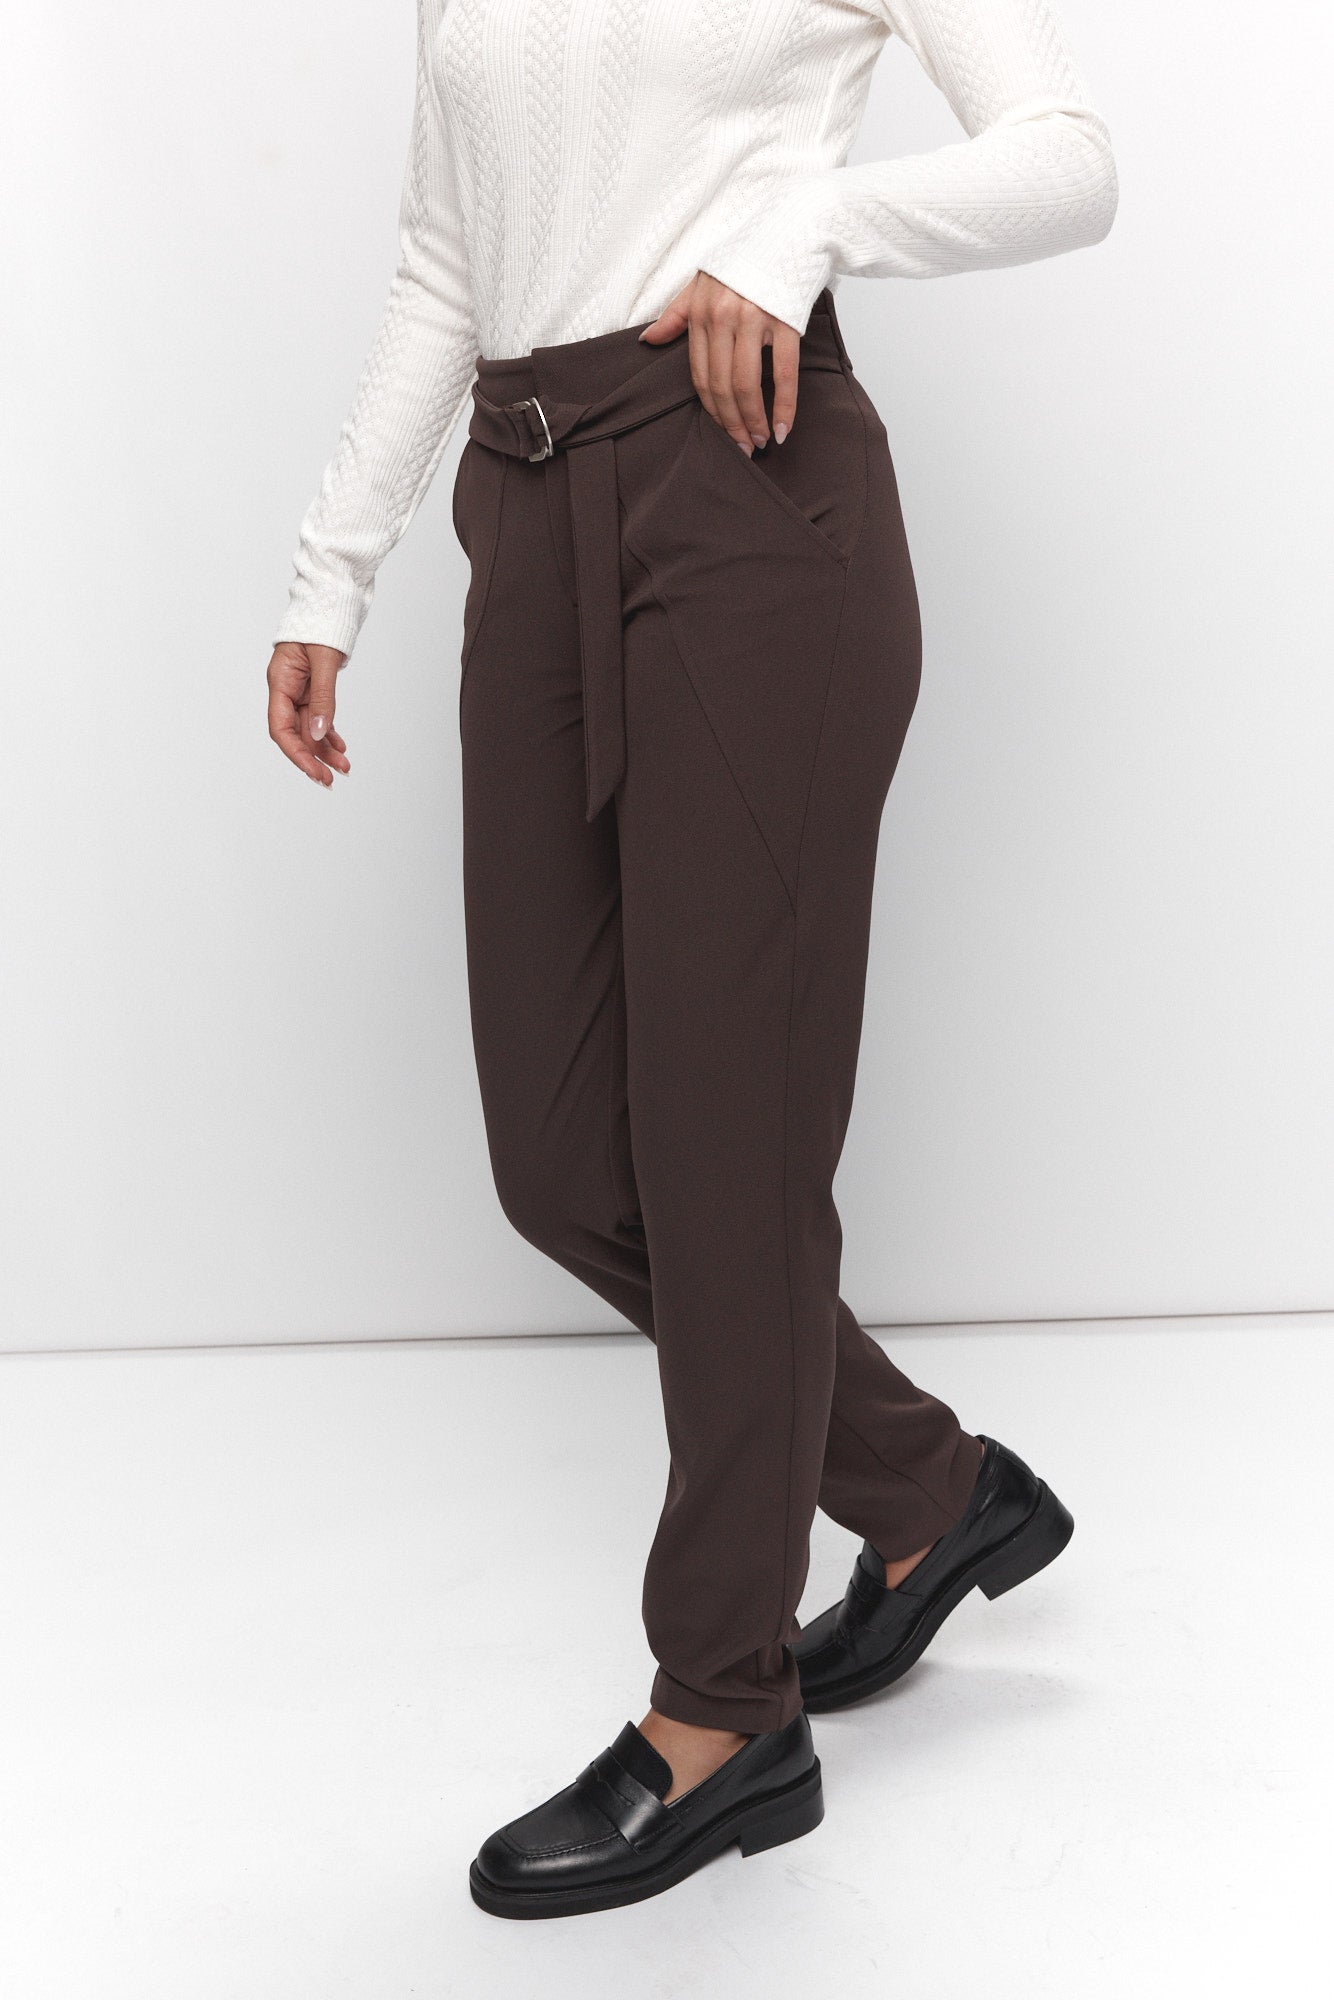 Brown pants | Florane